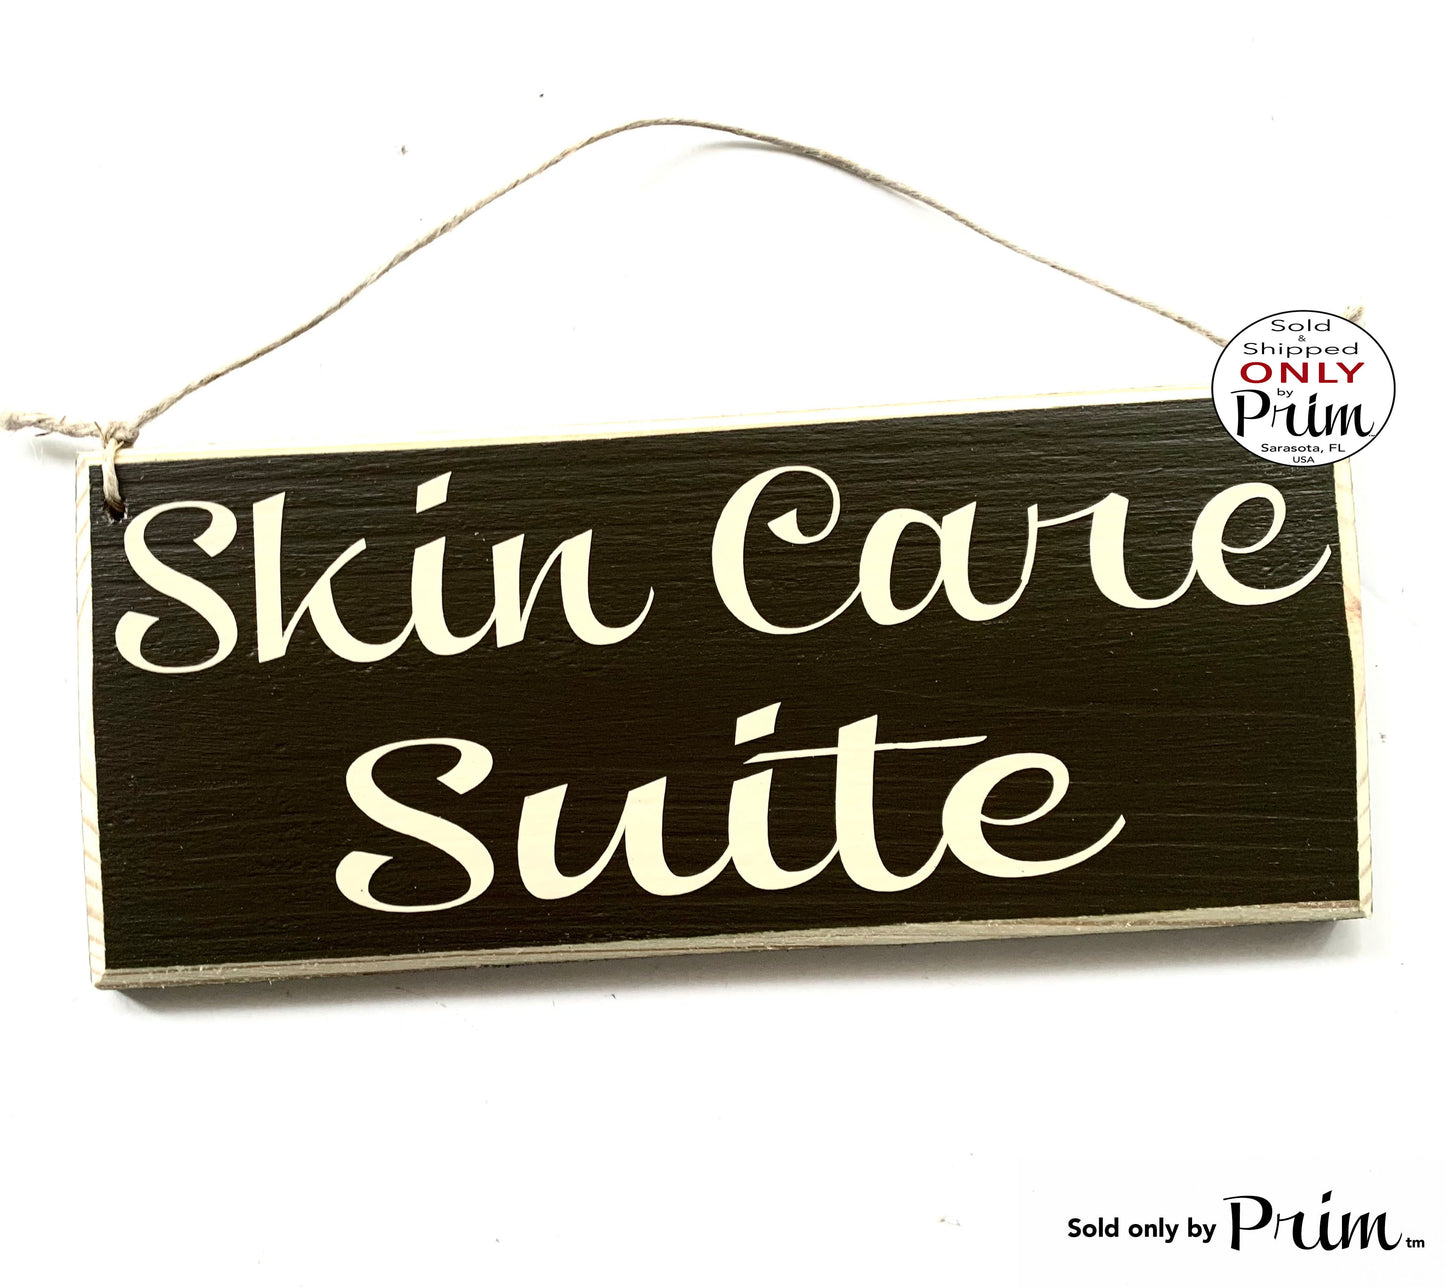 10x4 Skincare Suite Custom Wood Sign Facial Aesthetics Esthetician Spa Salon Massage Room Service Relaxation Treatment Hanger Door Plaque Designs by Prim 